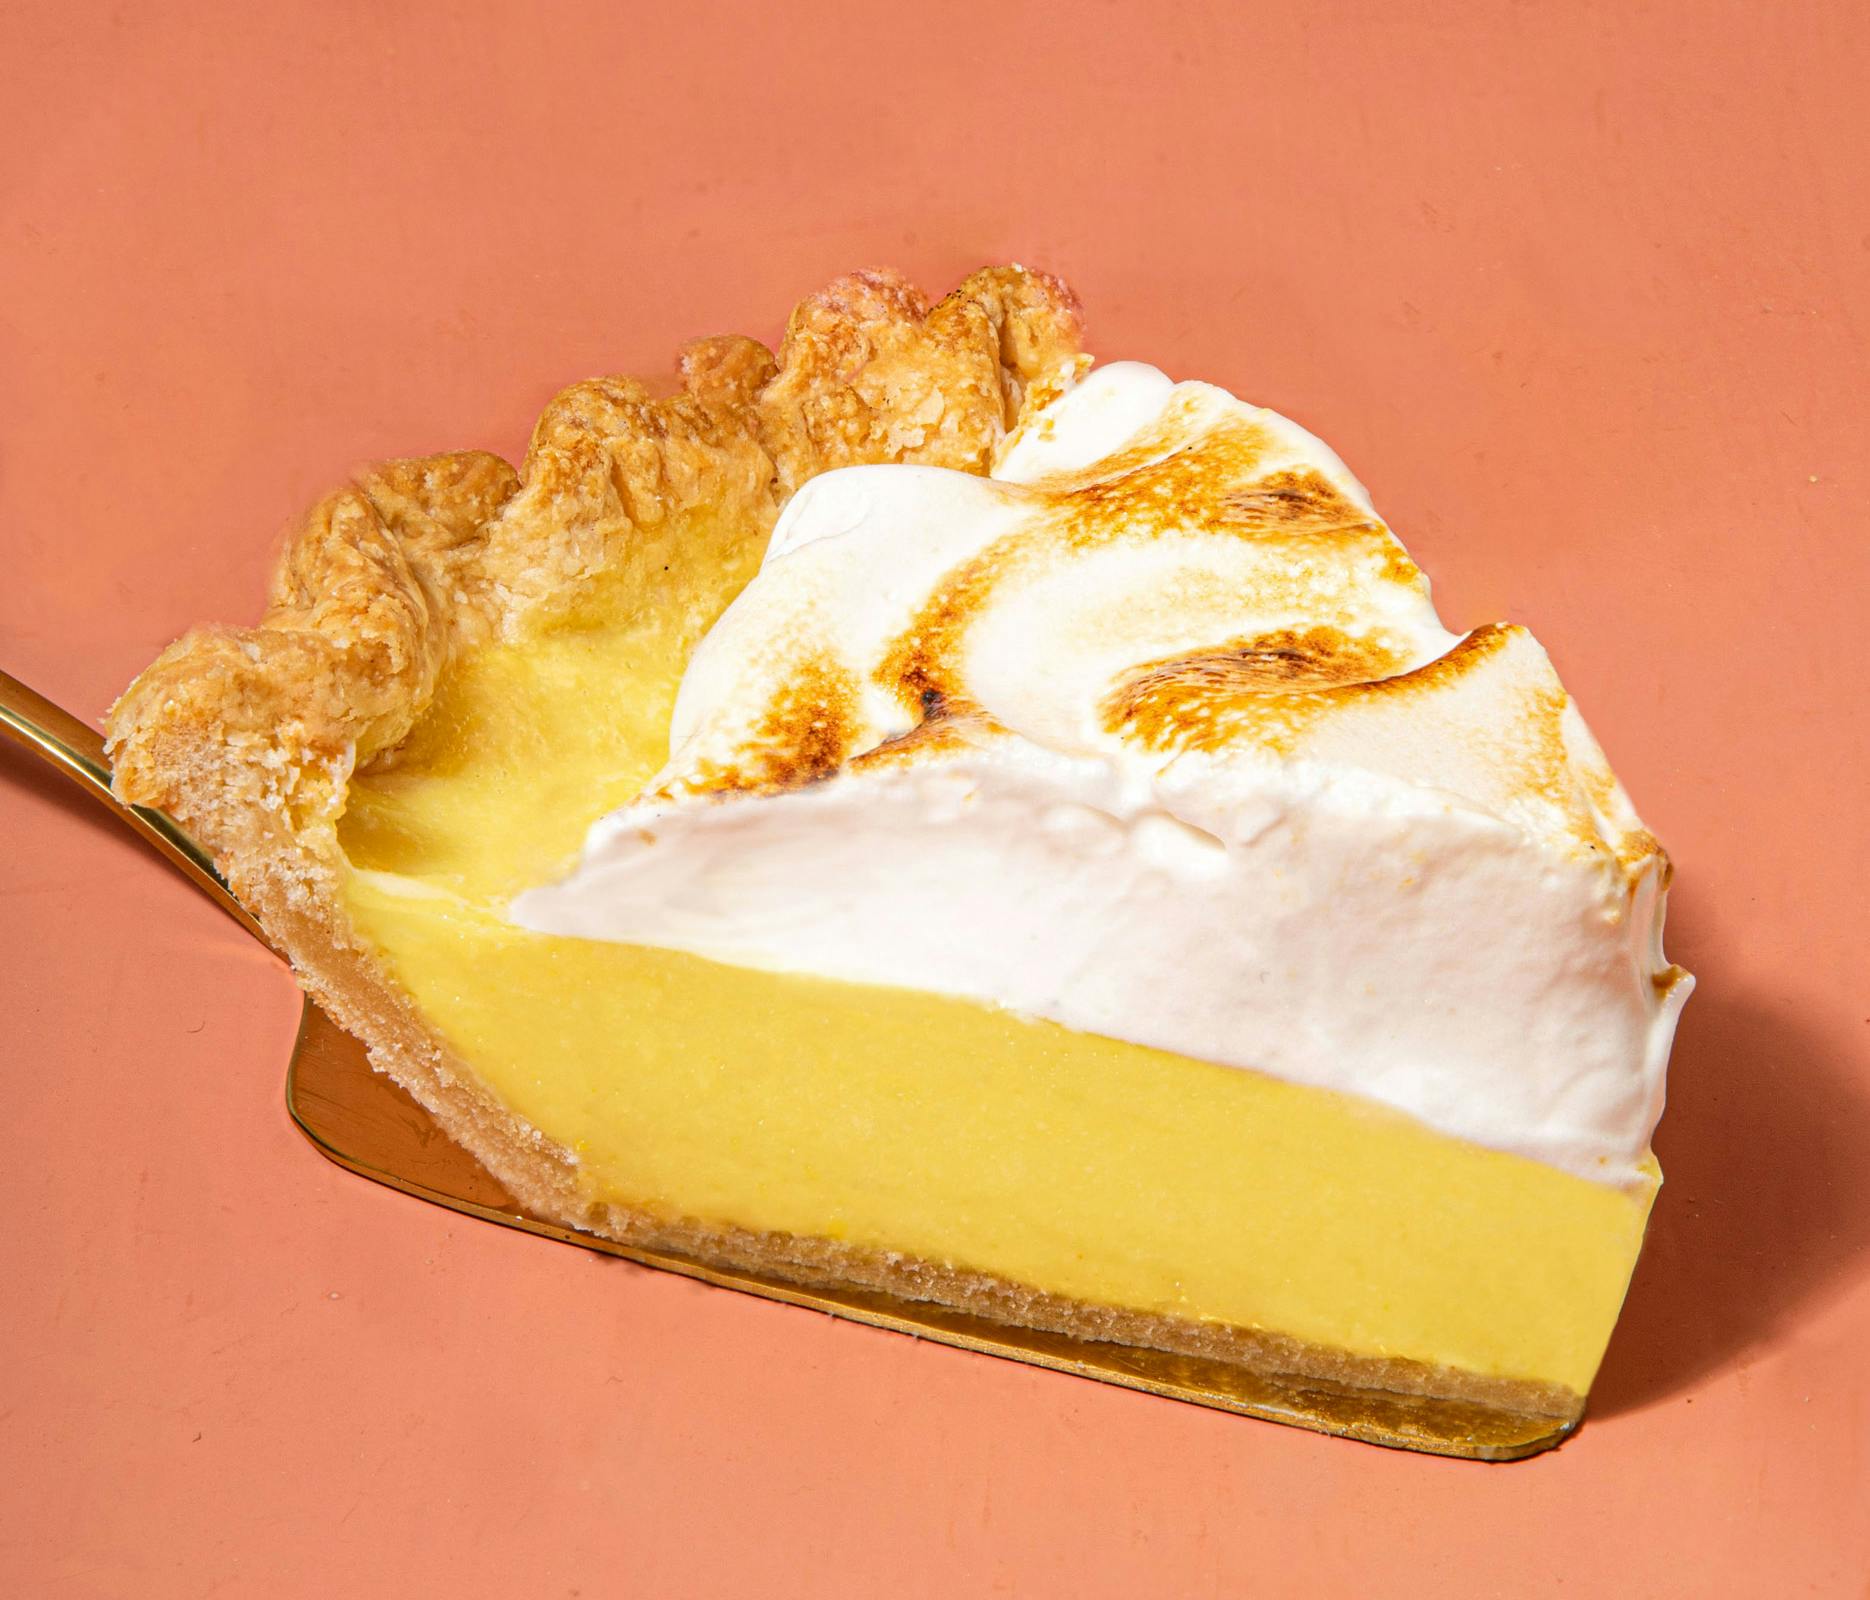 a slice of lemon meringue pie